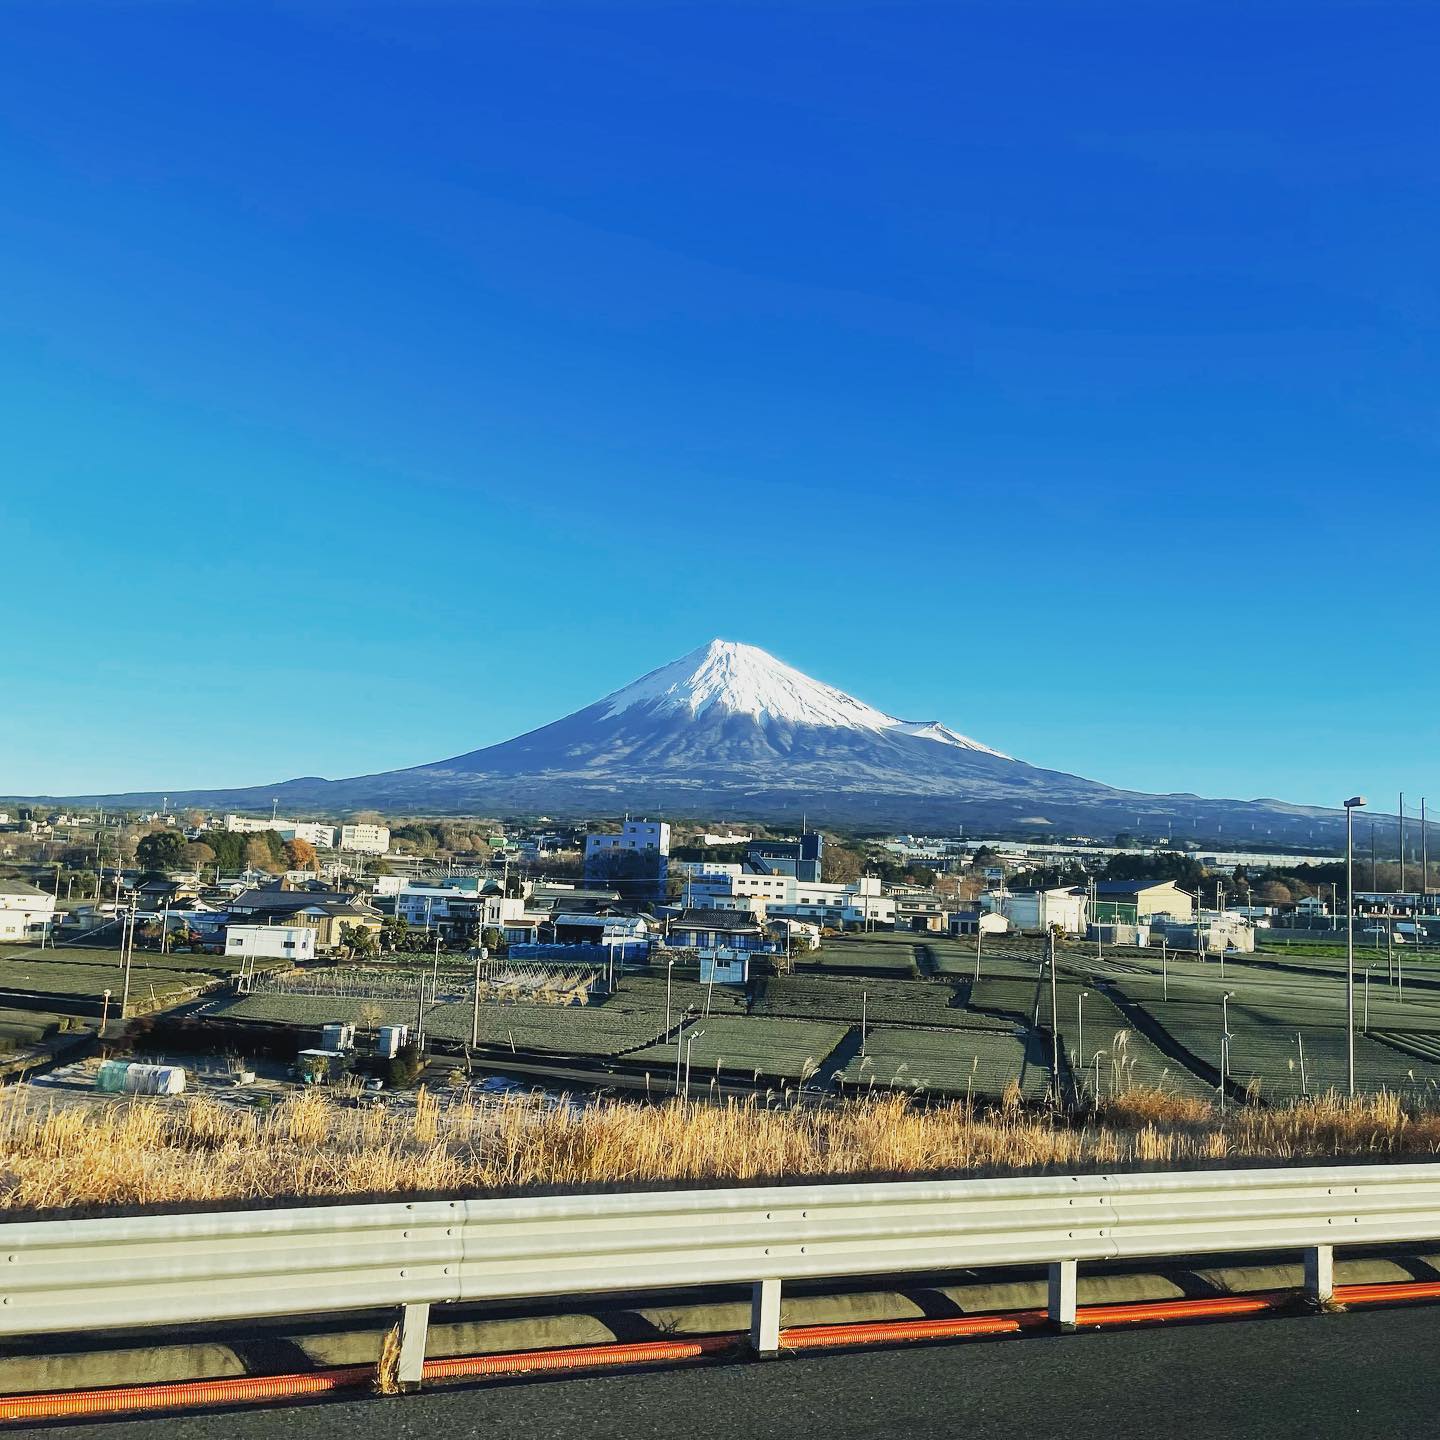 It's there

#mtfuji #fujisan #mountain #shizuoka #highway
#富士山 #山 #富士市 #東名高速 #はかた号